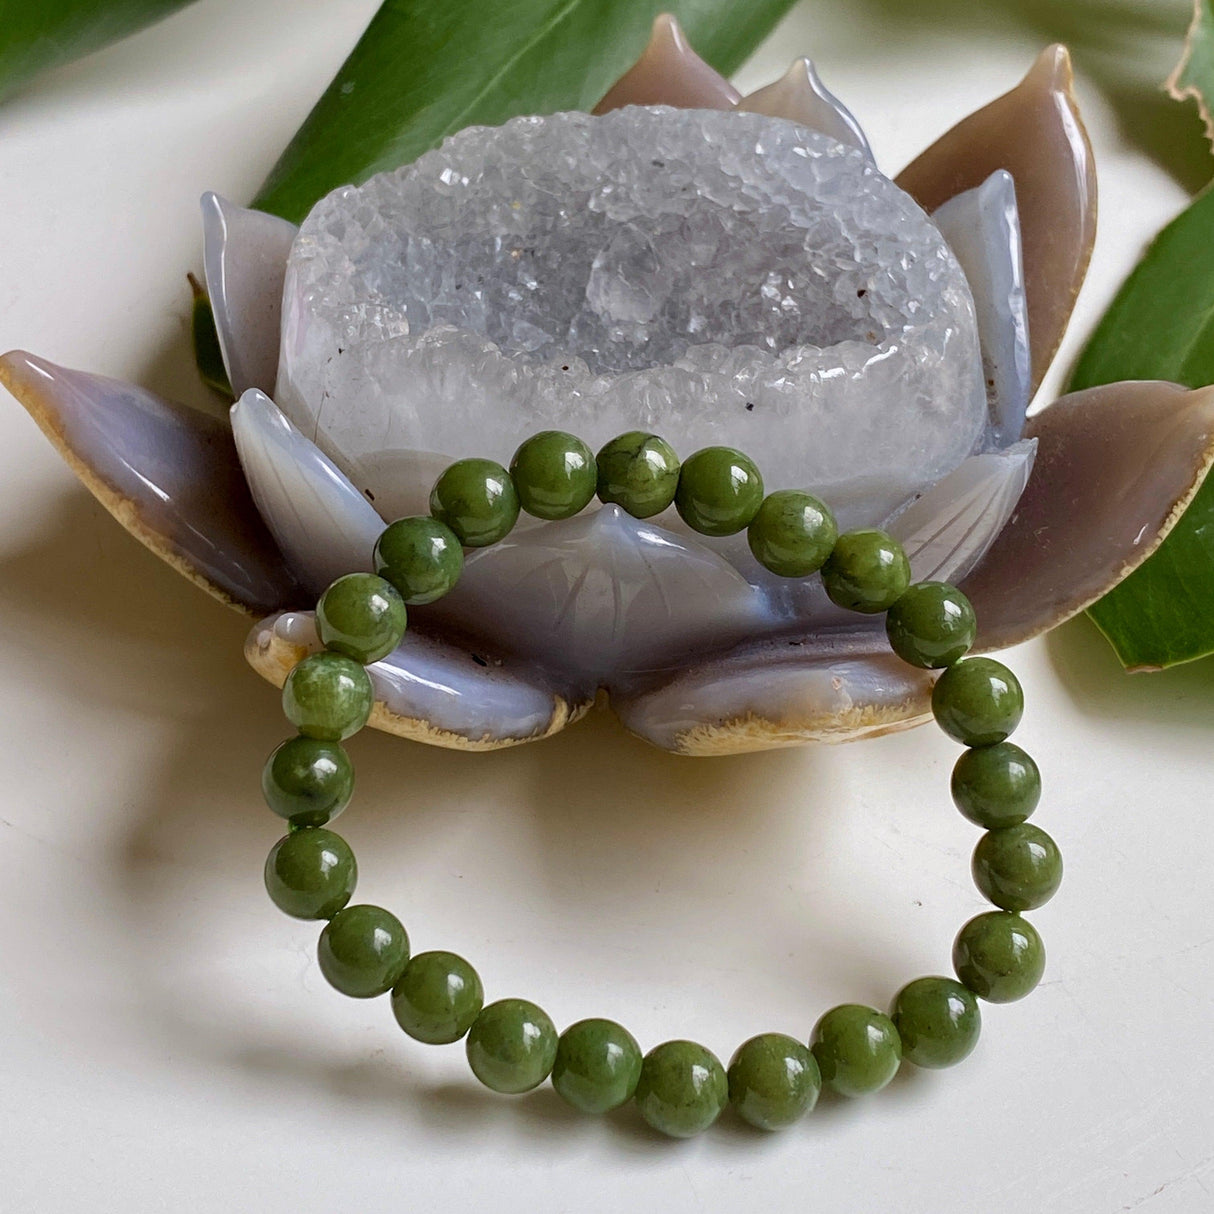 Jade - Nephrite (Canadian) Bracelet - Nature's Magick